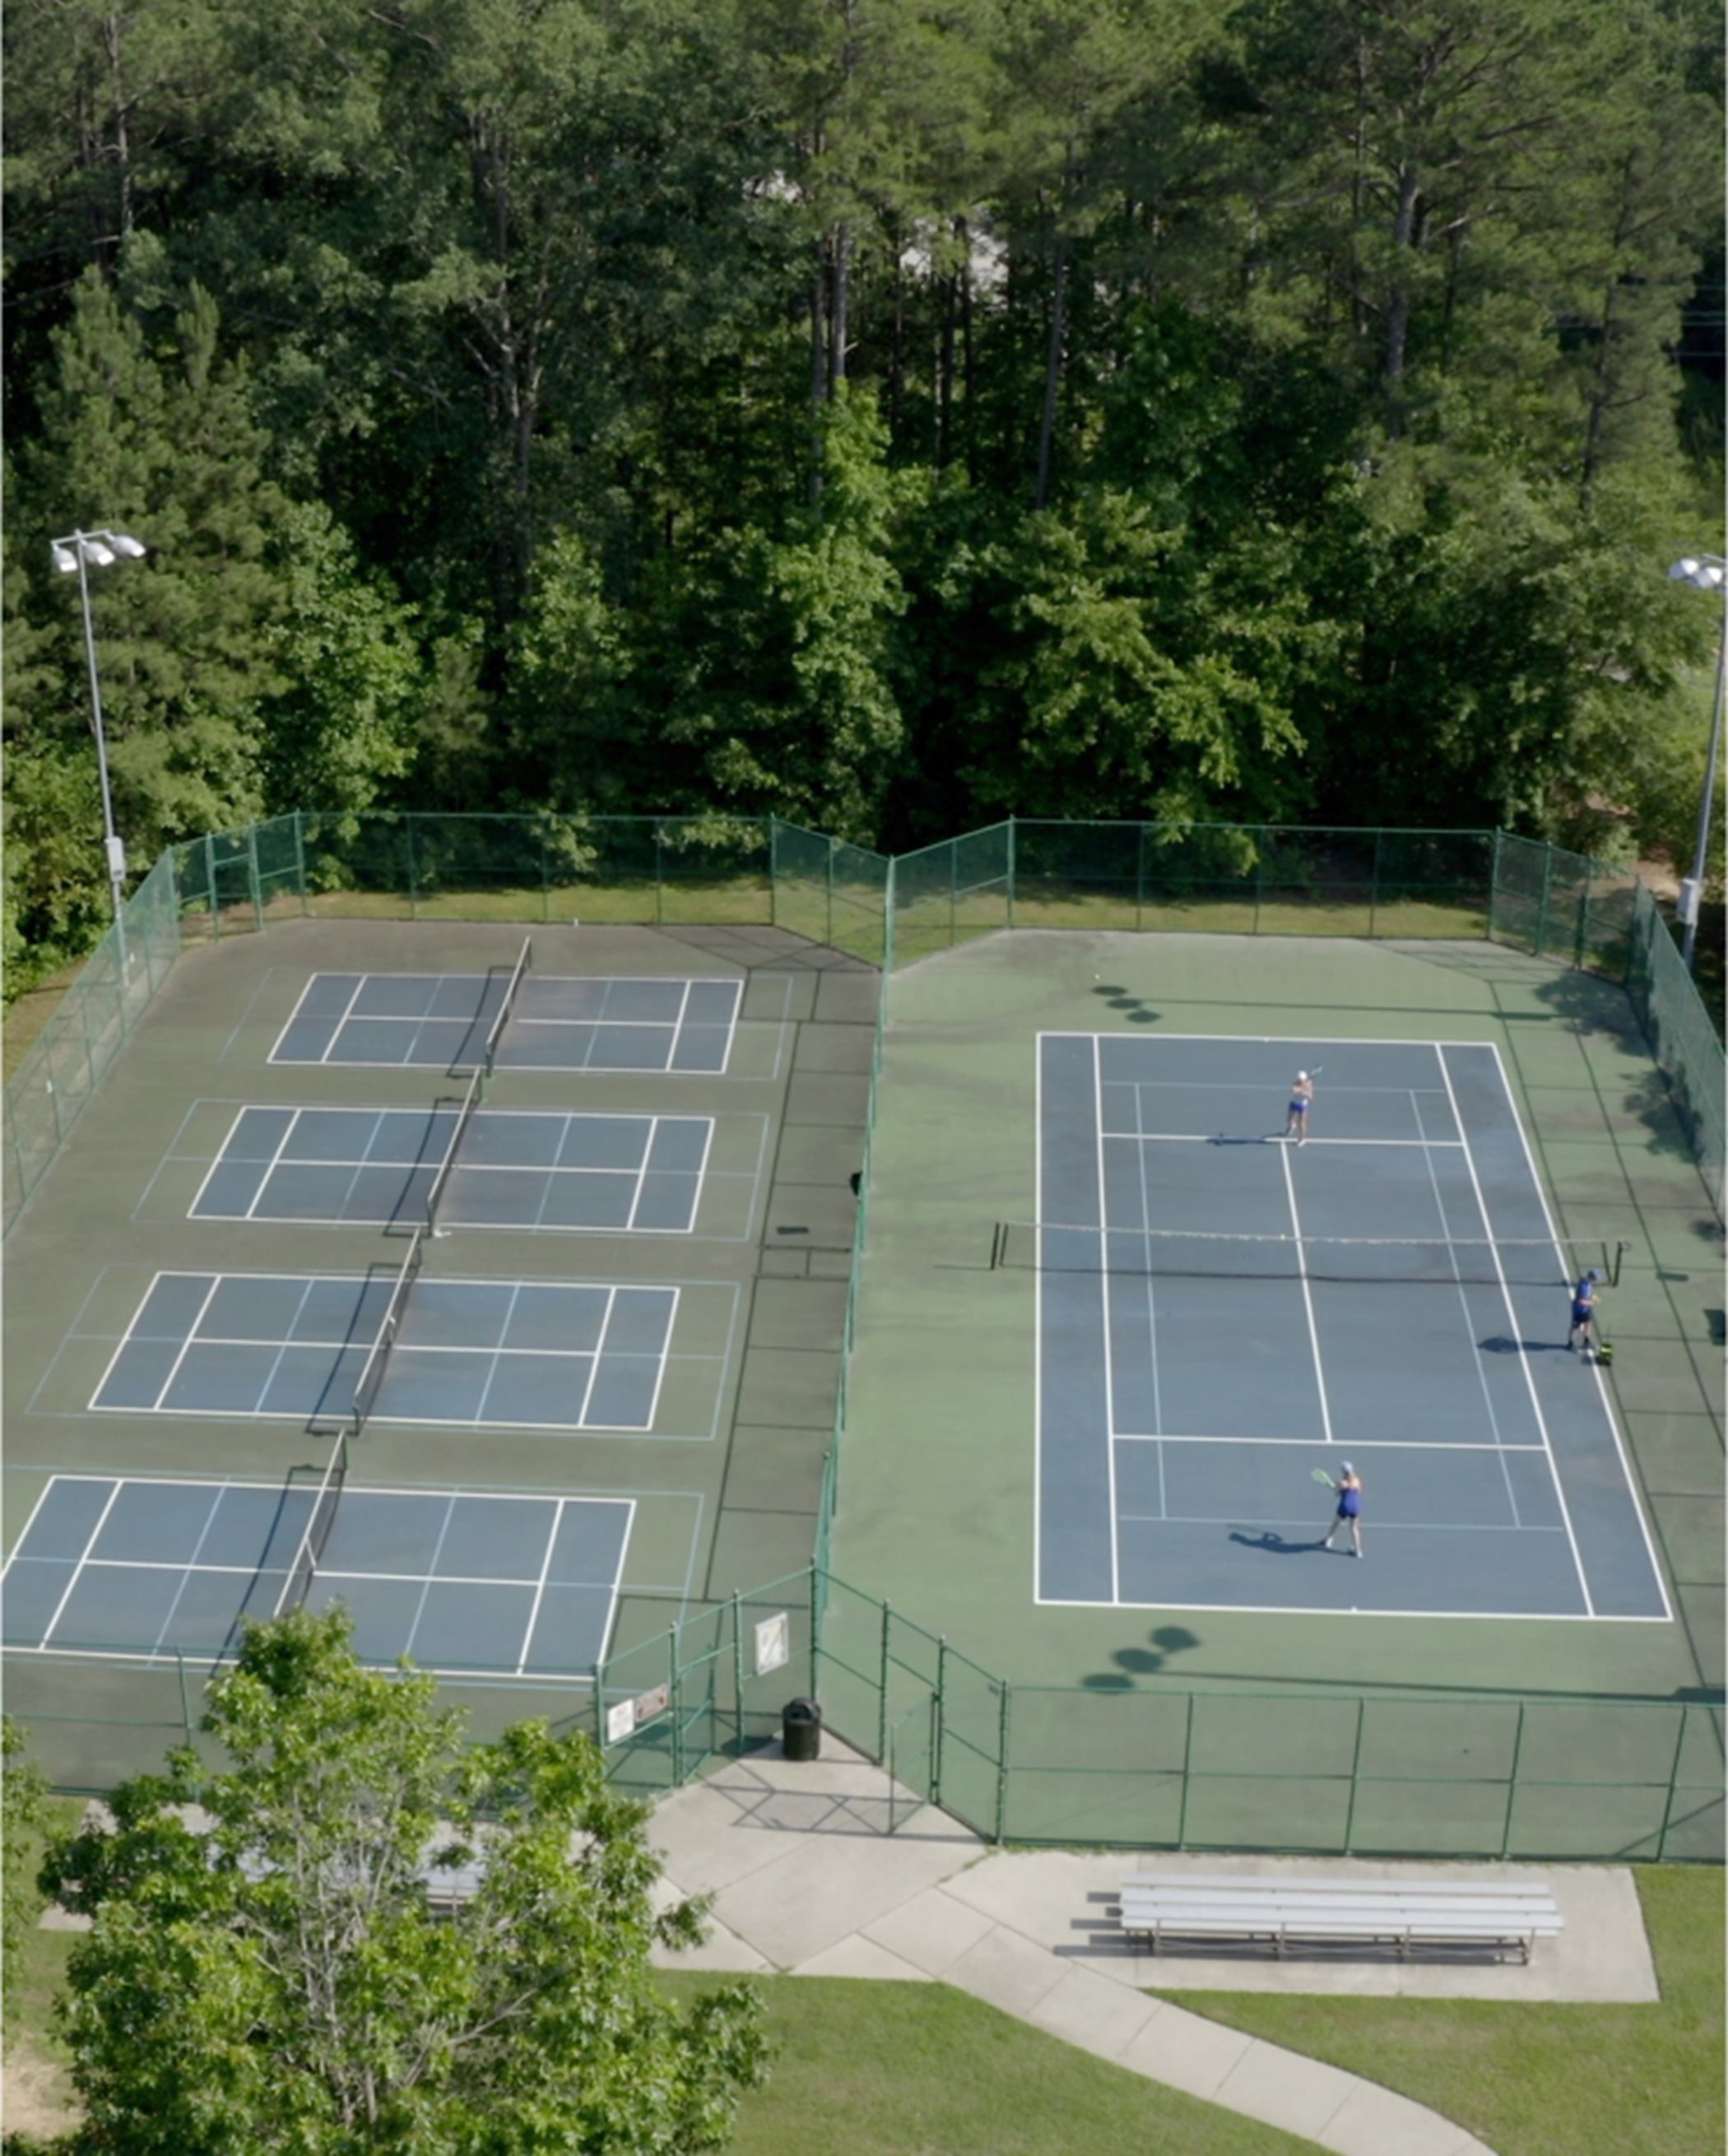 Aerial view of Smith Farm's Tennis Court